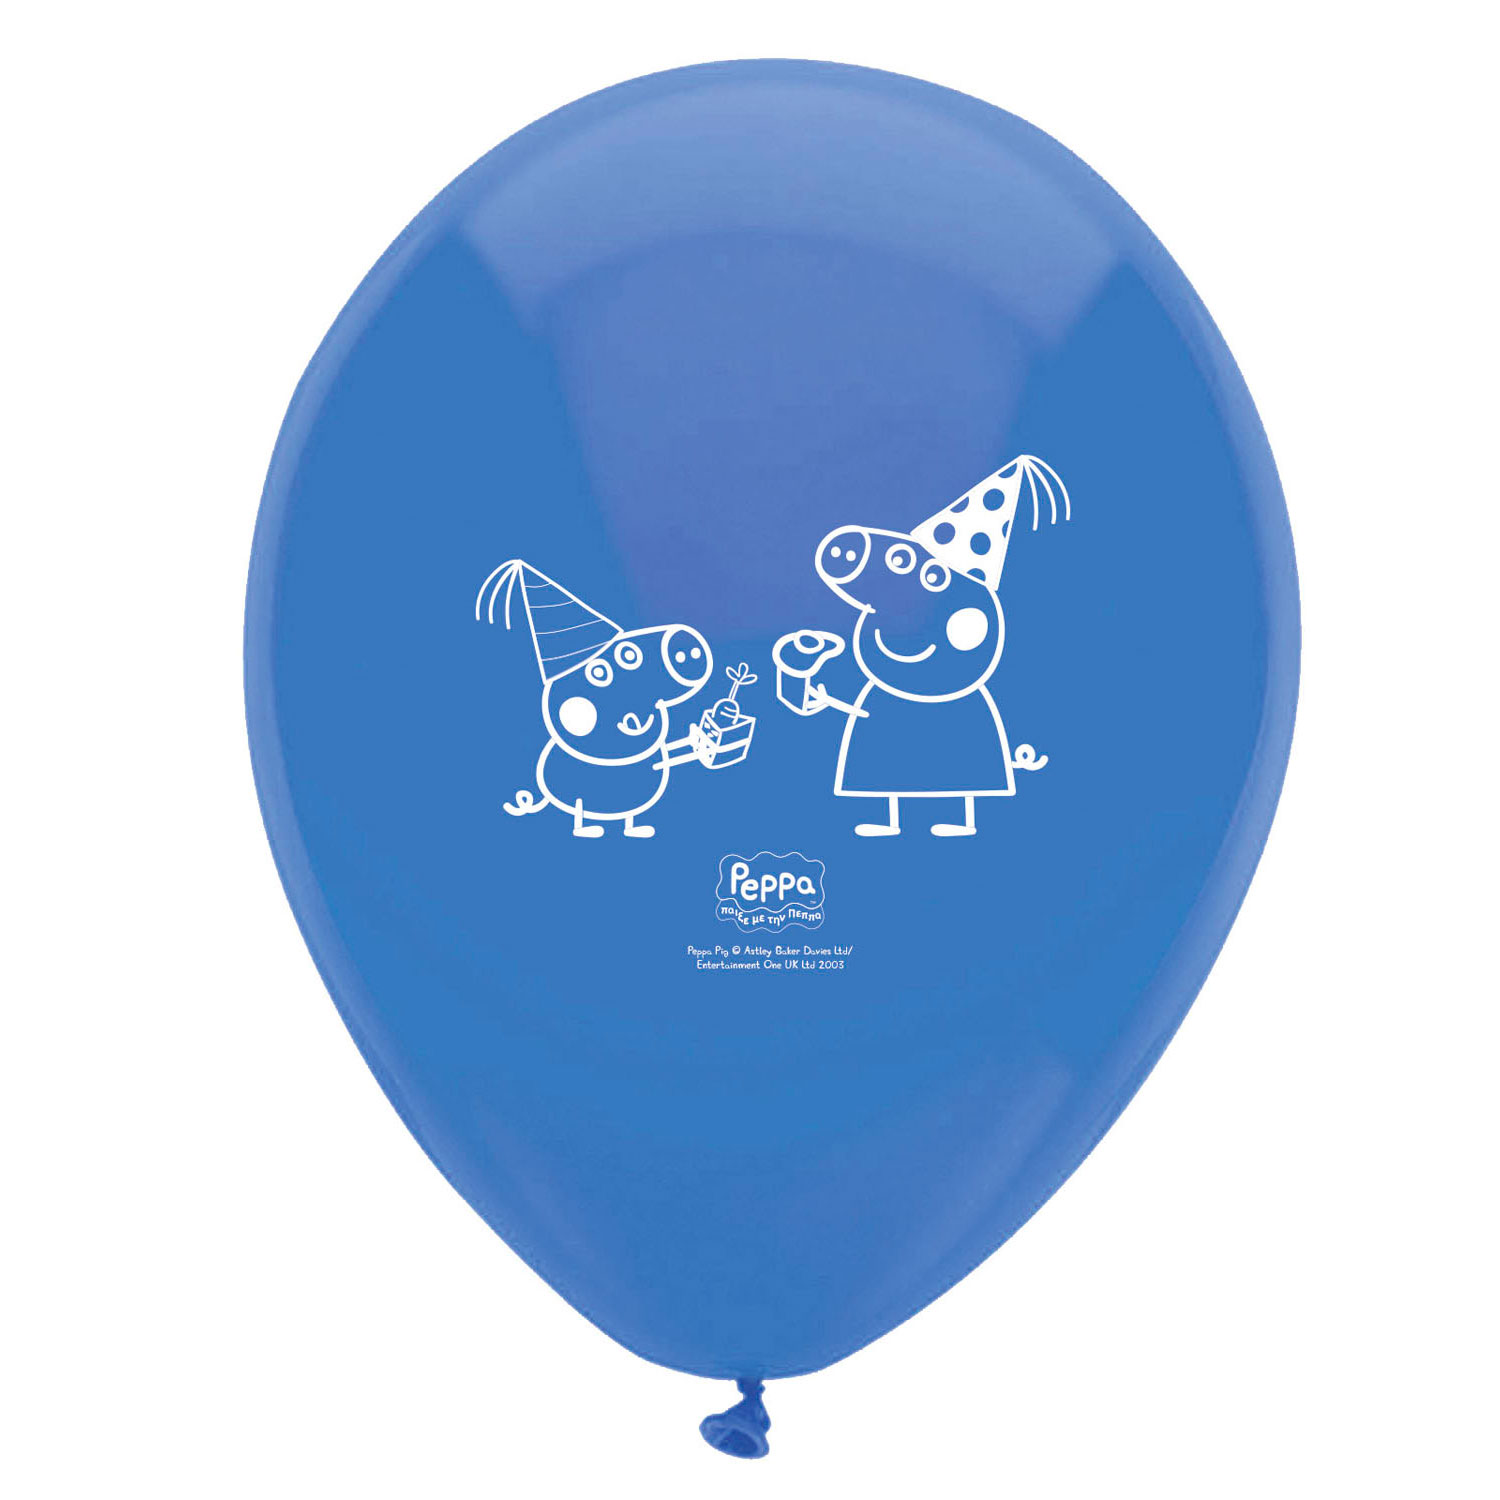 Peppa Pig Balloons, 12pcs.